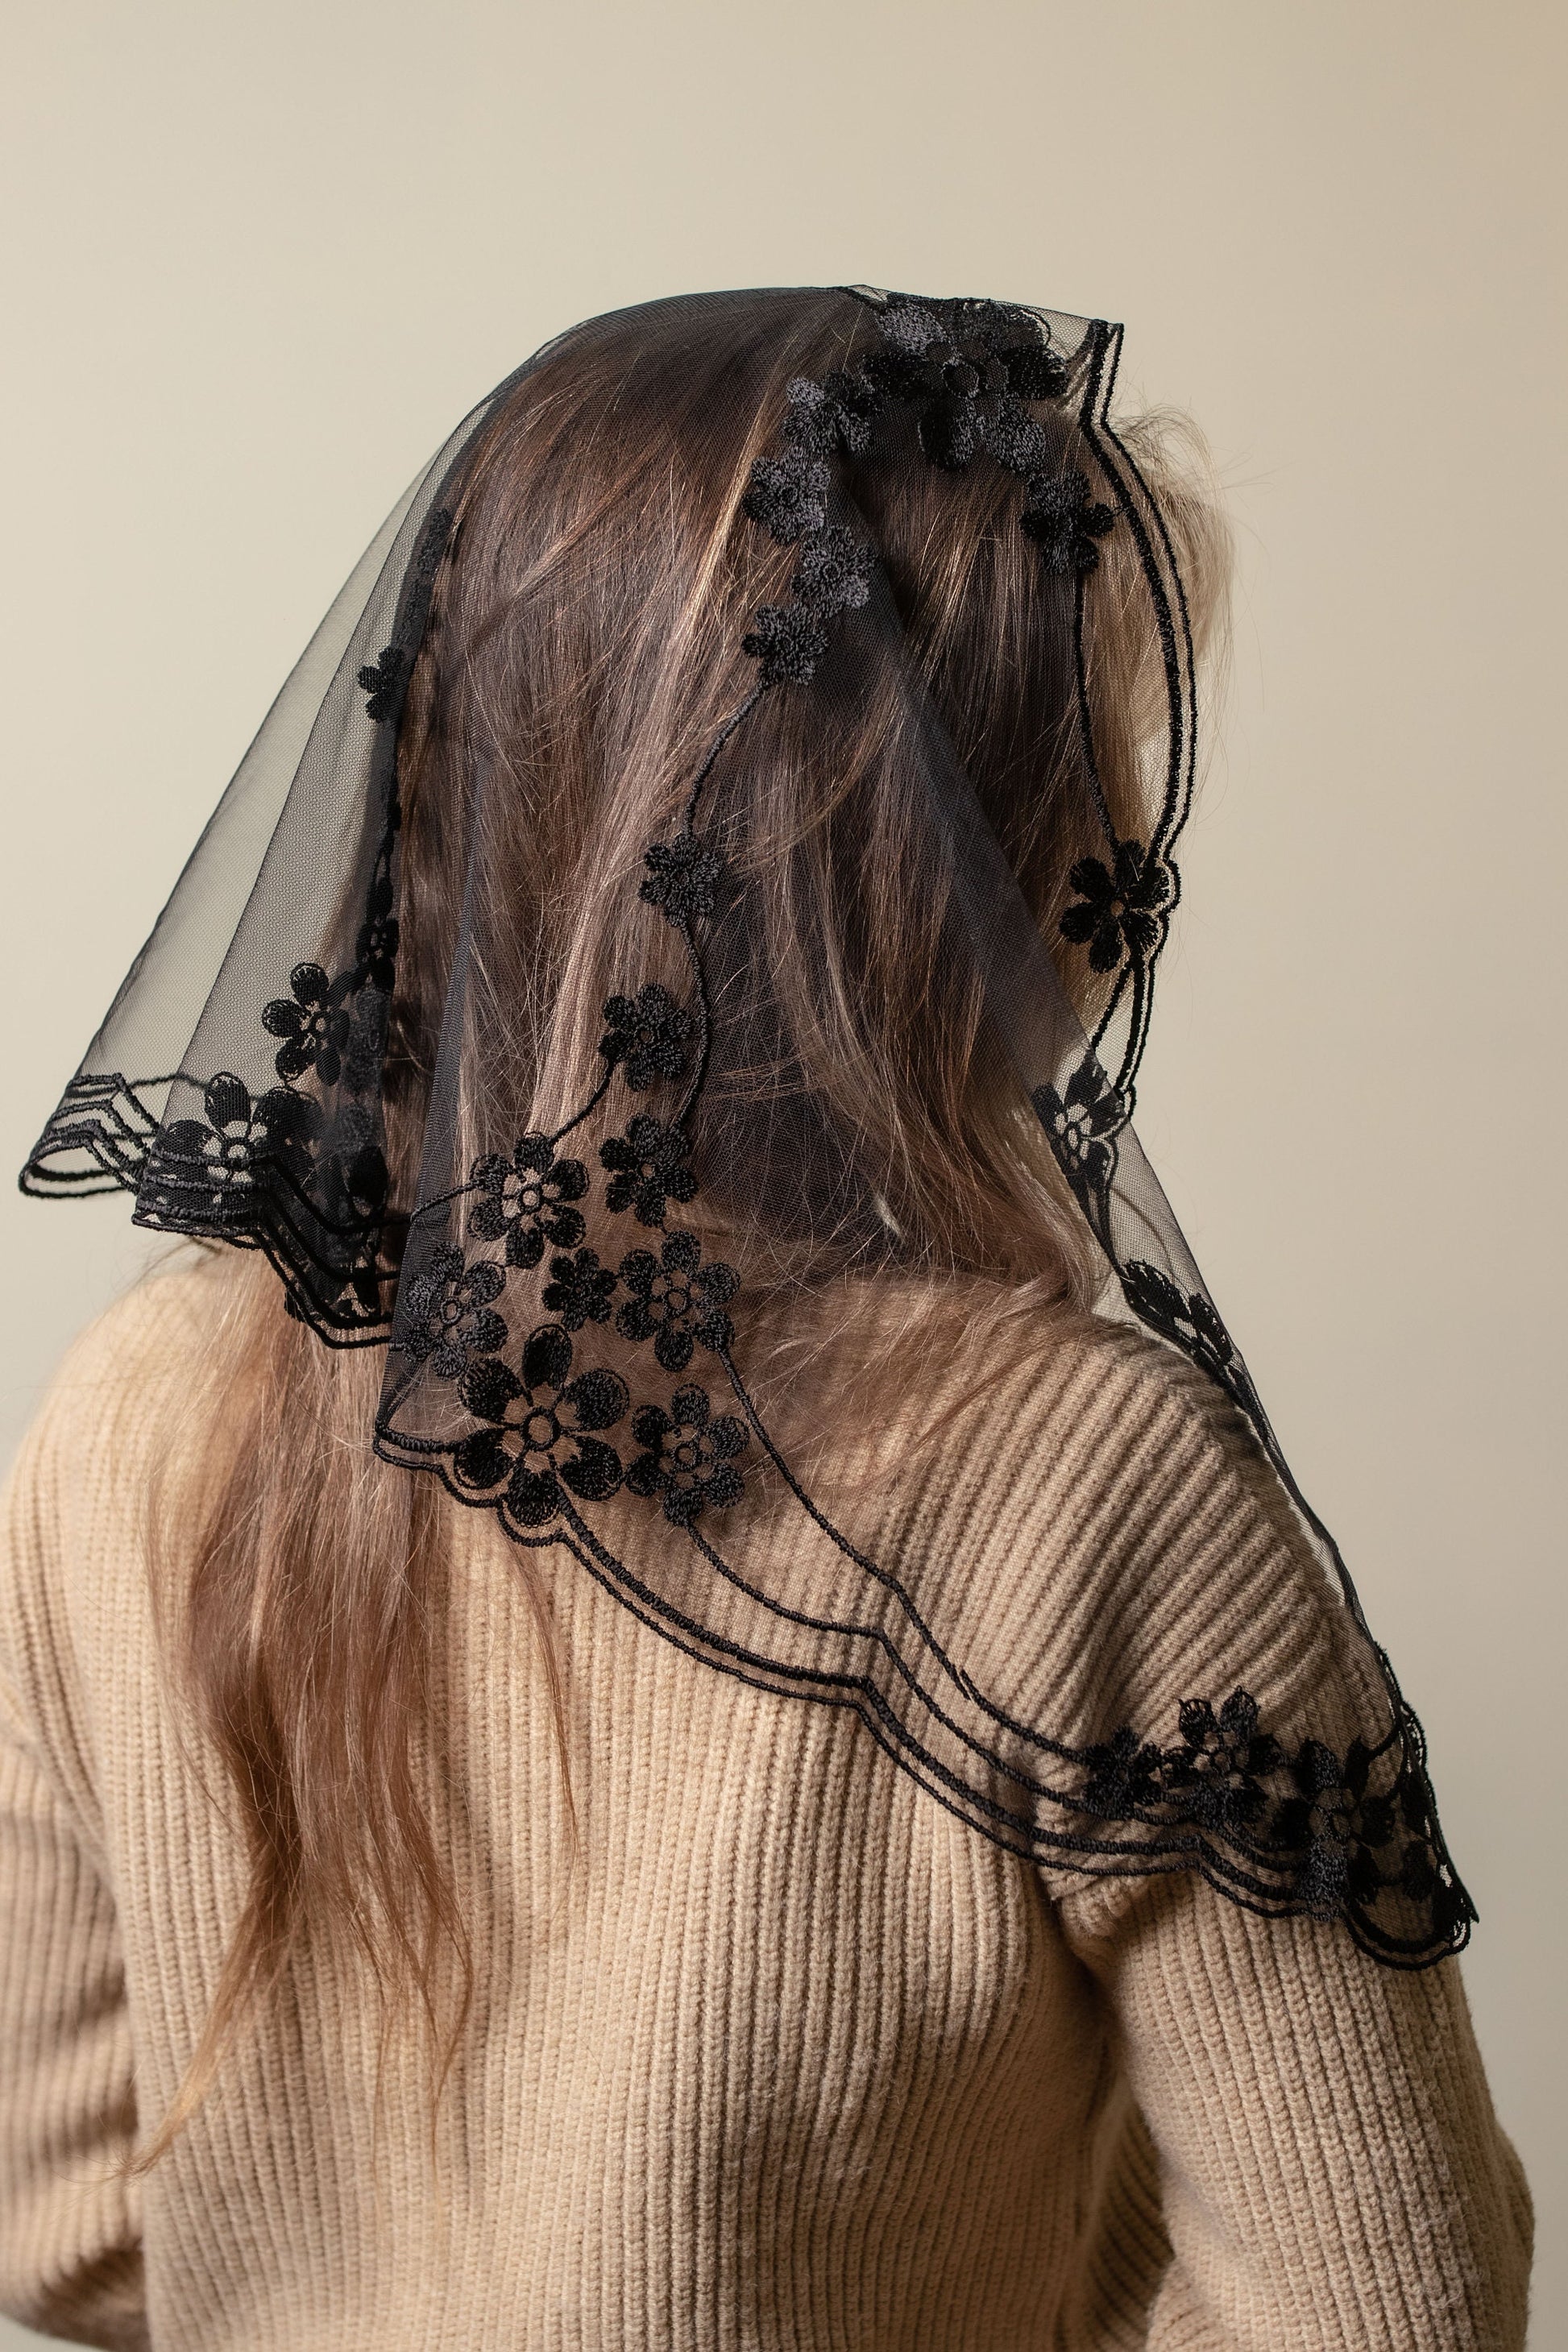 BESTSELLER veil| Black chapel veil with floral design - Maria Veils